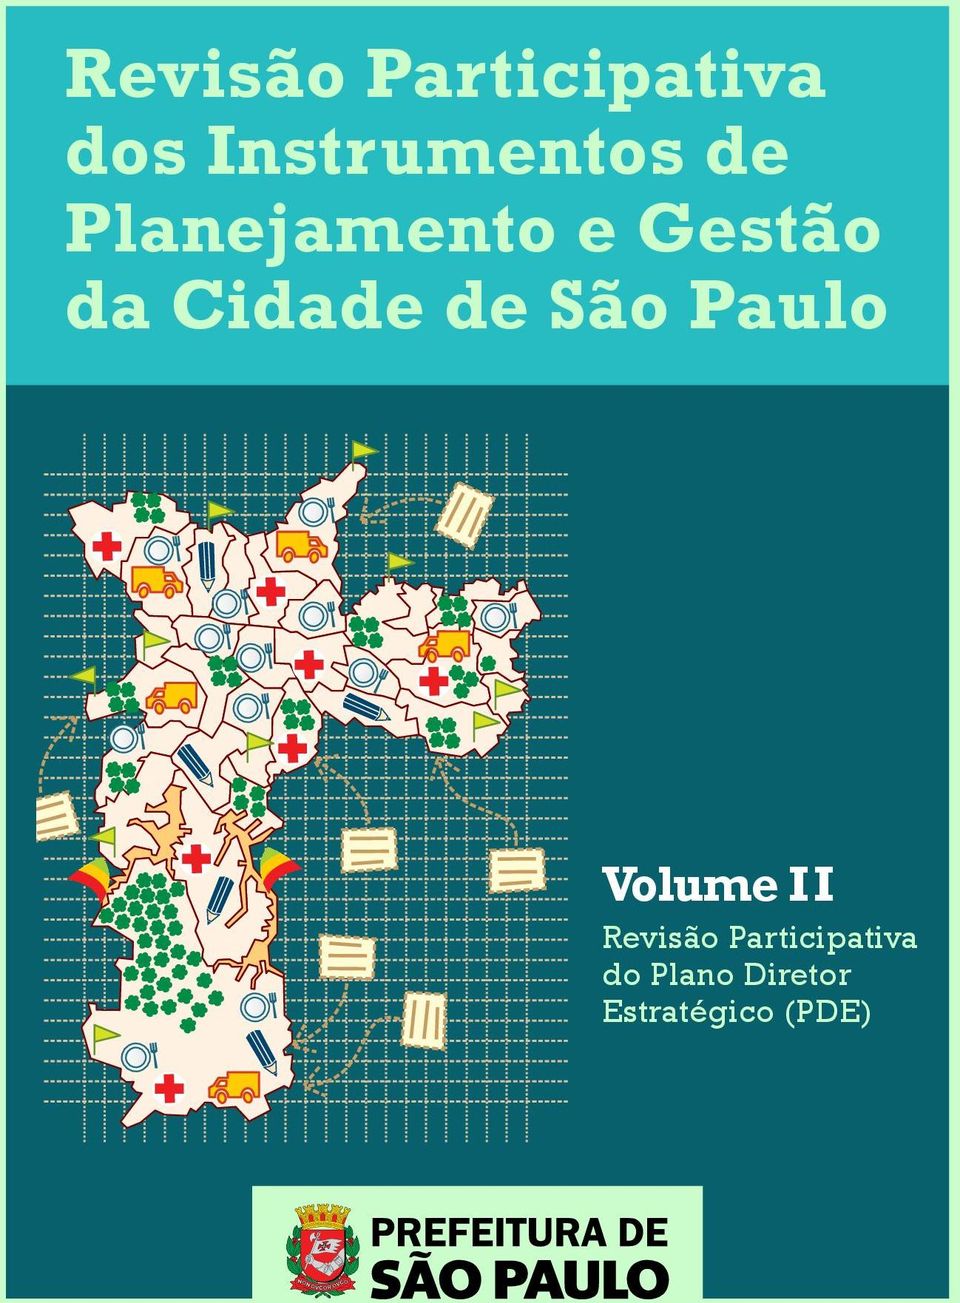 São Paulo Volume II Revisão